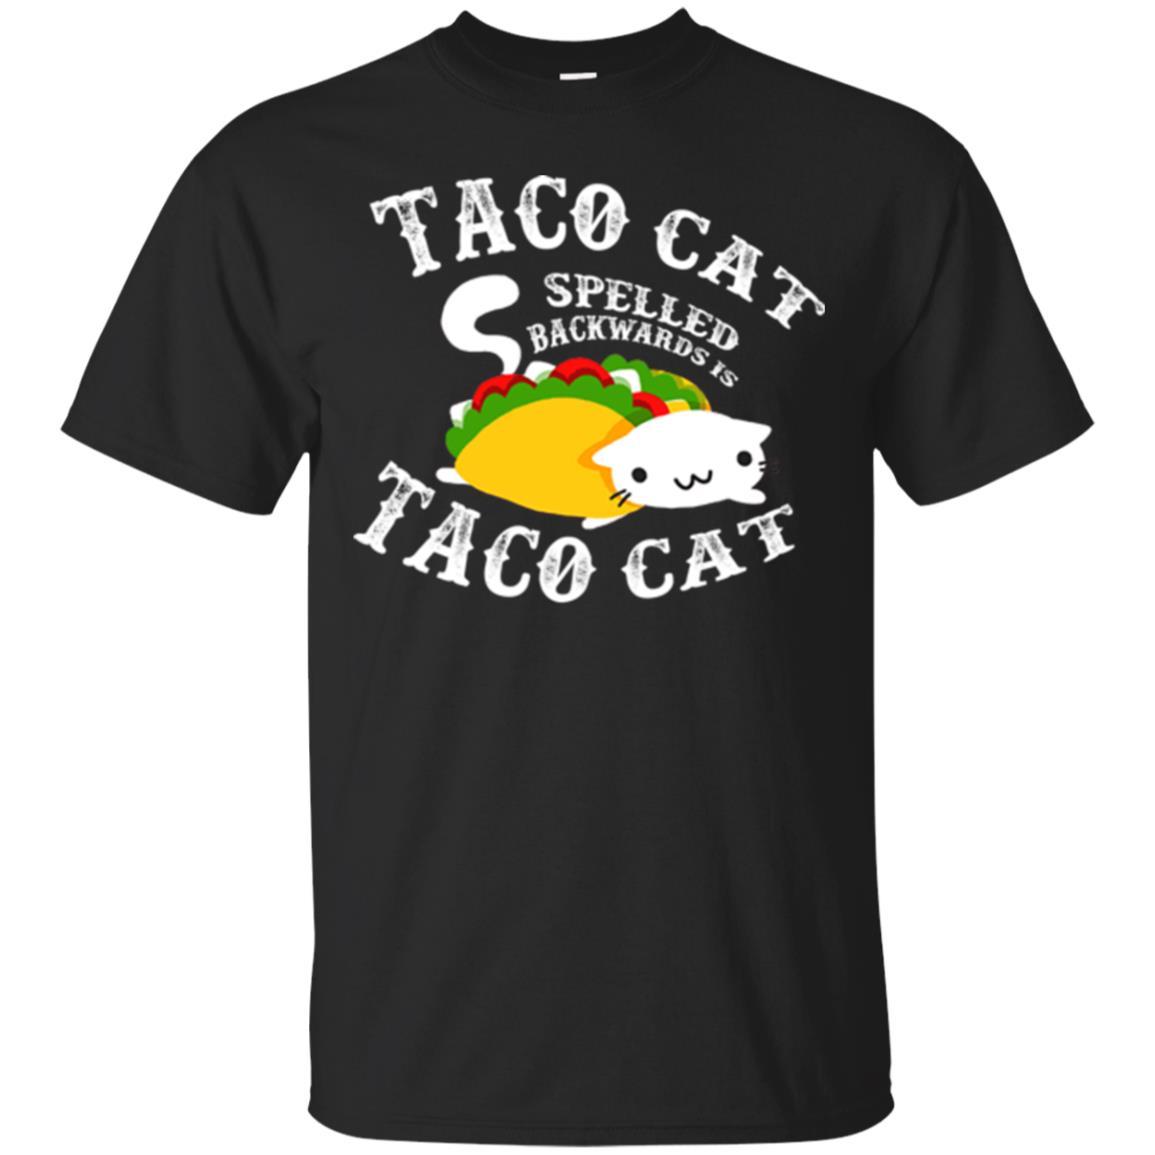 Taco Cat Spelled Backwards Is Taco Cat T-shirt